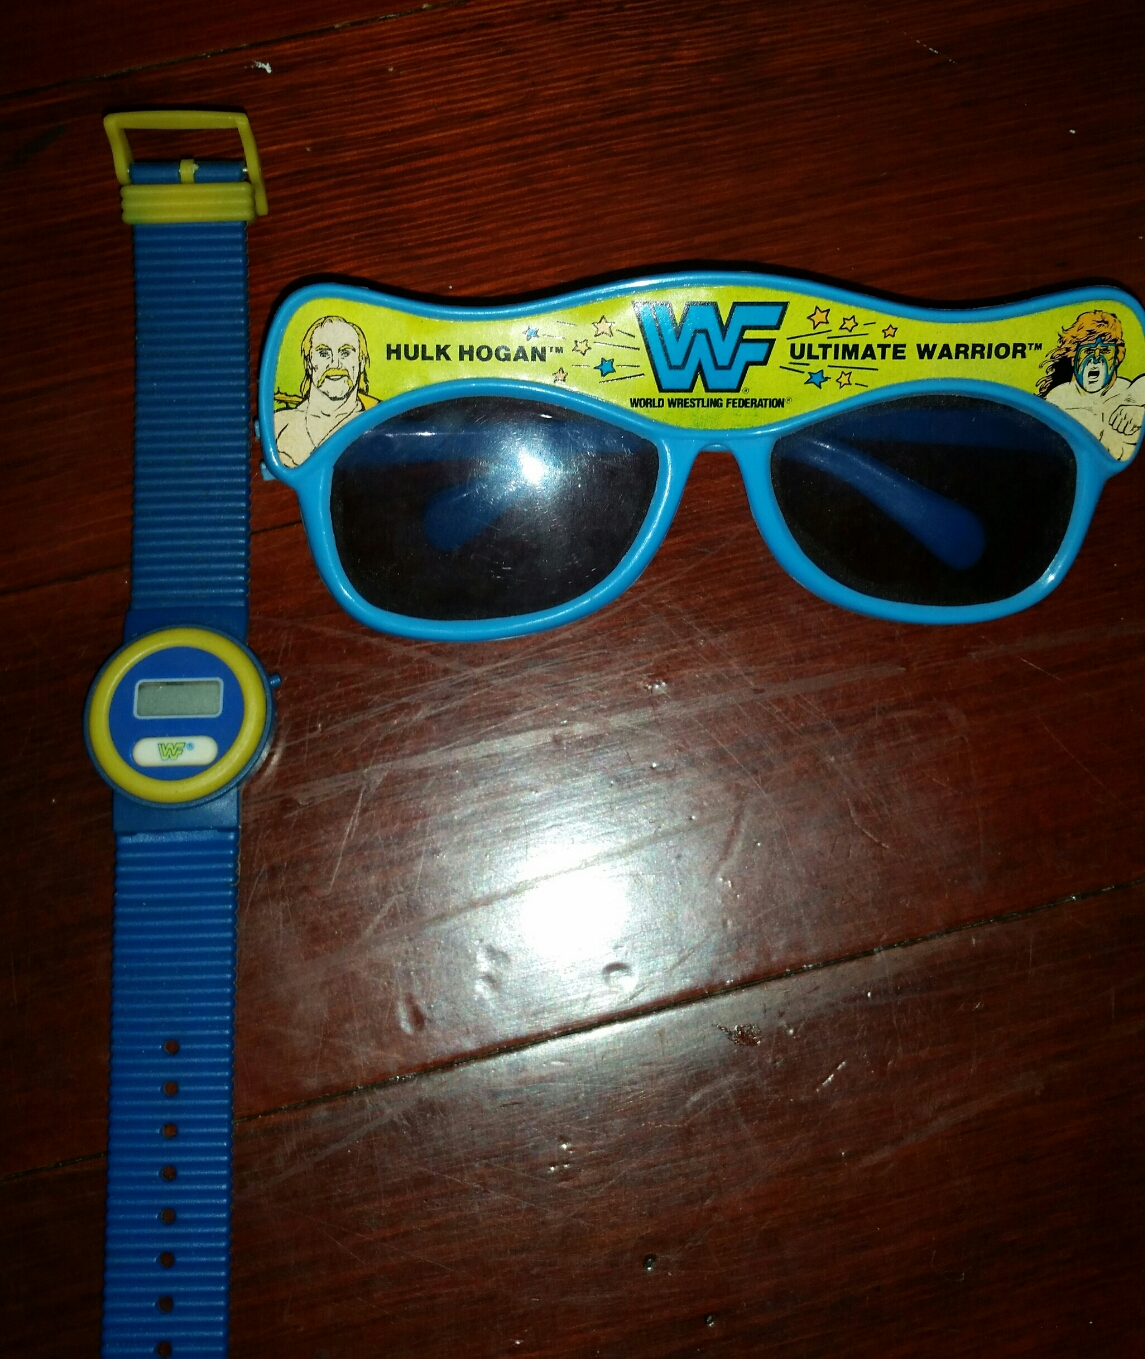 WWF Hulk Hogan and Ultimte Warrior sunglasses and watch